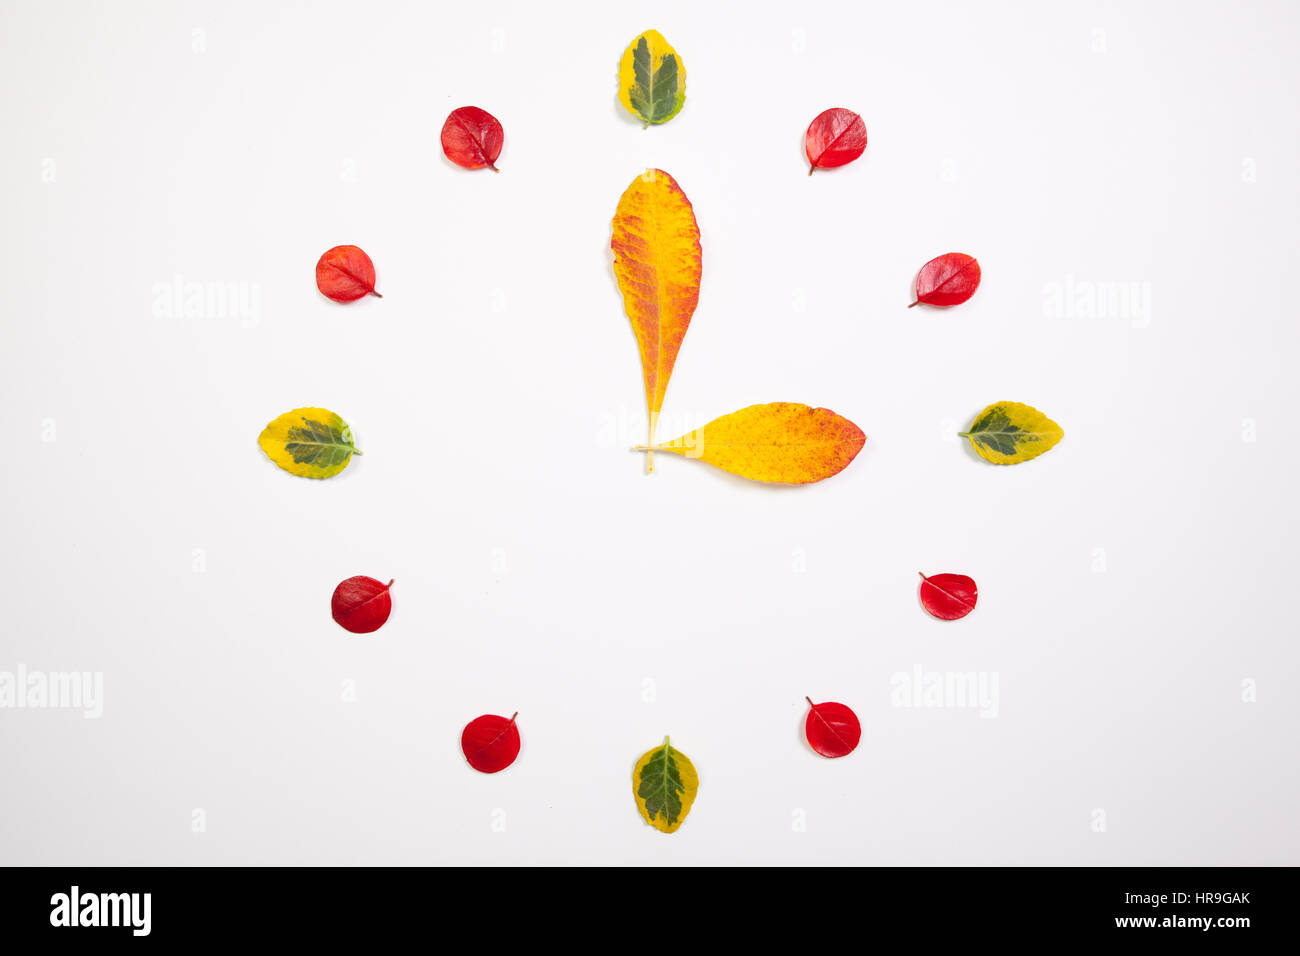 Autumn Time - Clock of autumn leafs Stock Photo